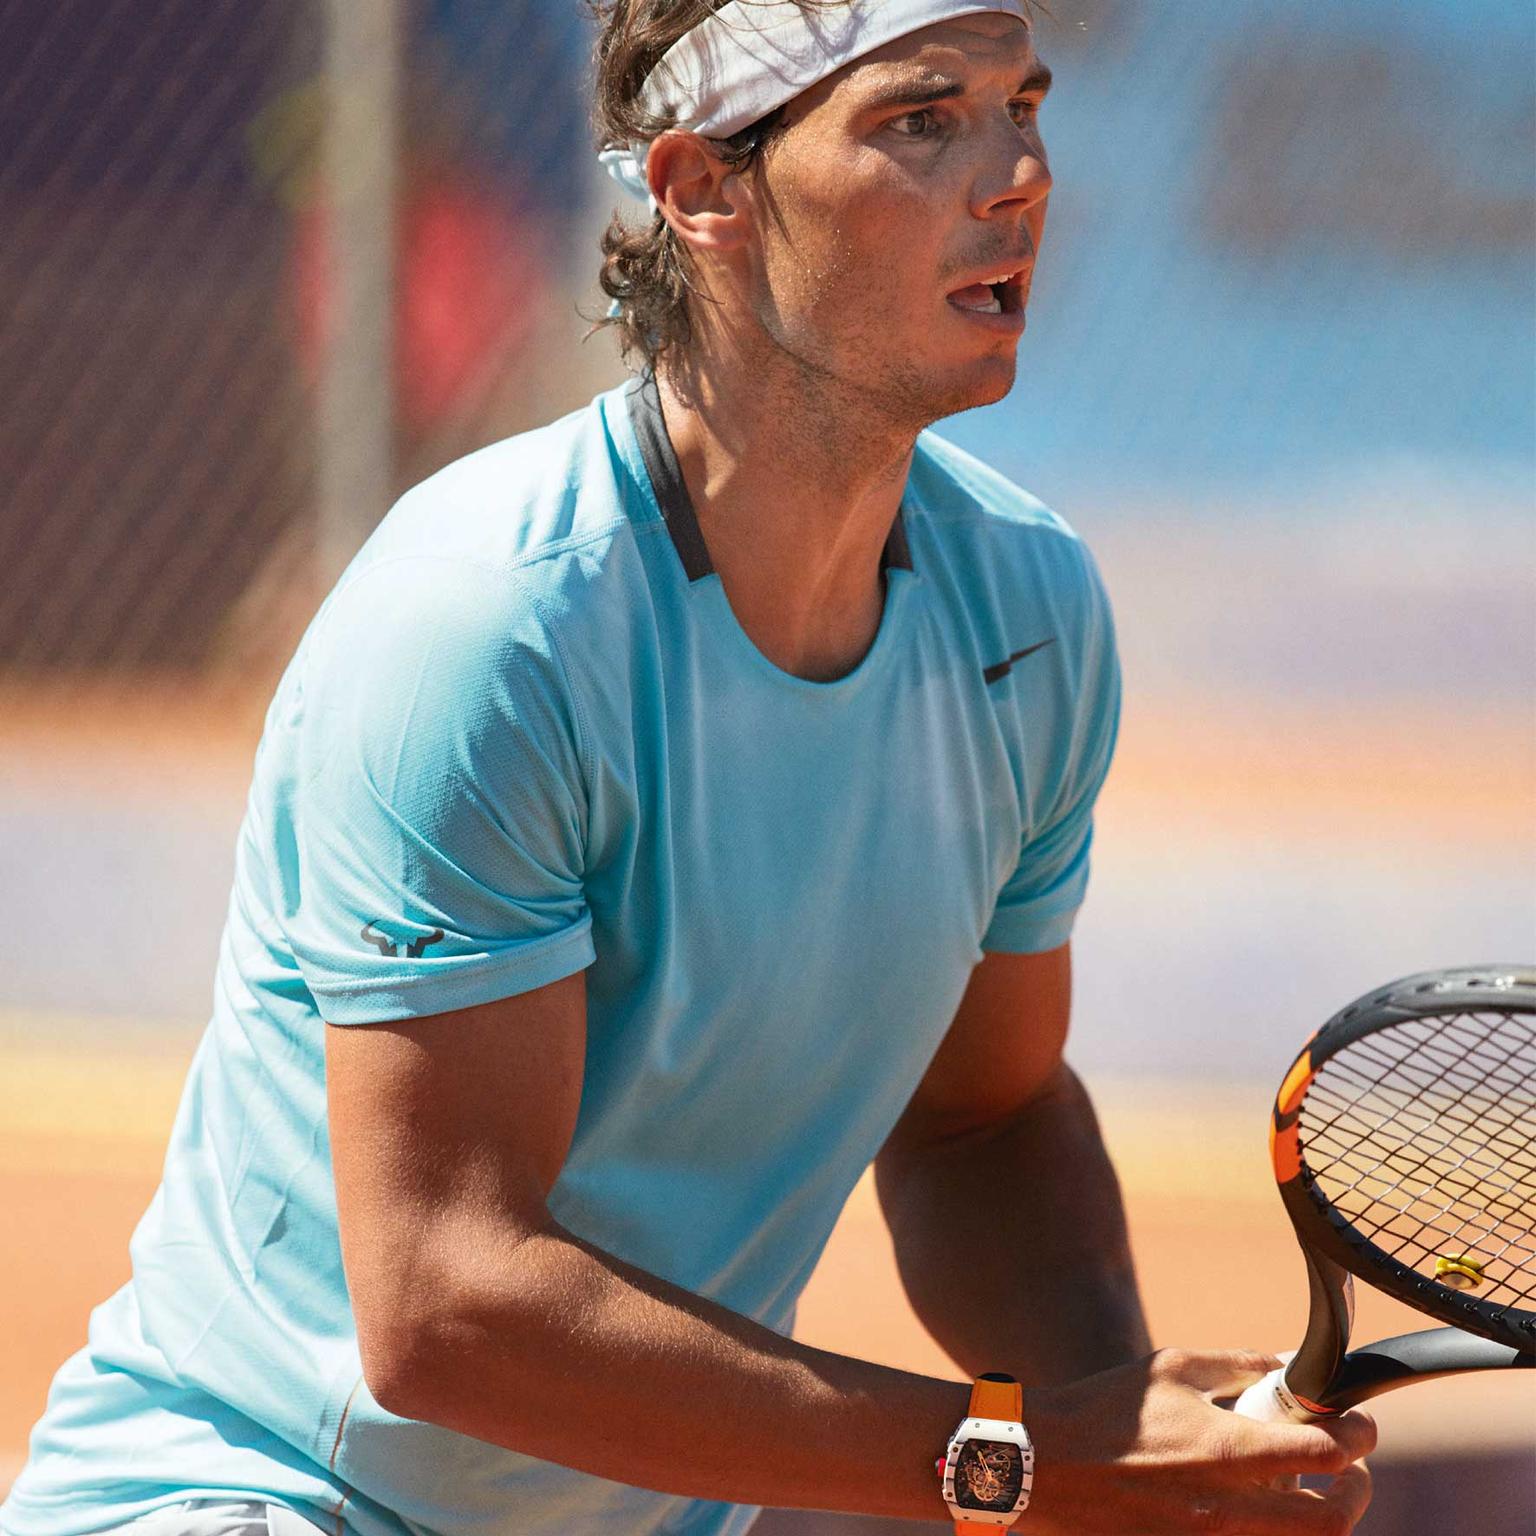 Nadal on court wearing Richard Mille watch